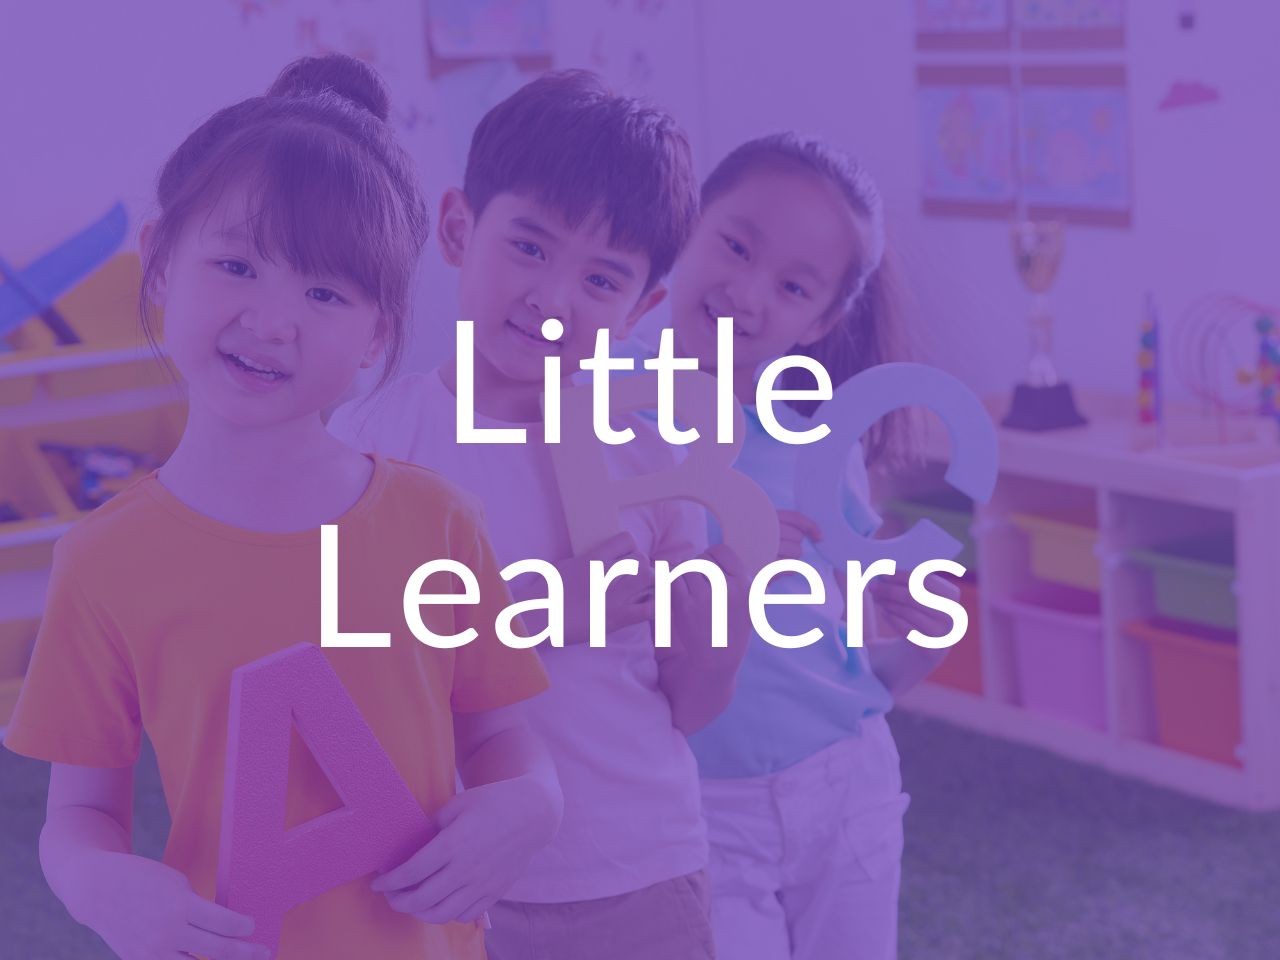 Pre k - Kindergarten program with 3 small children holding the alphabet